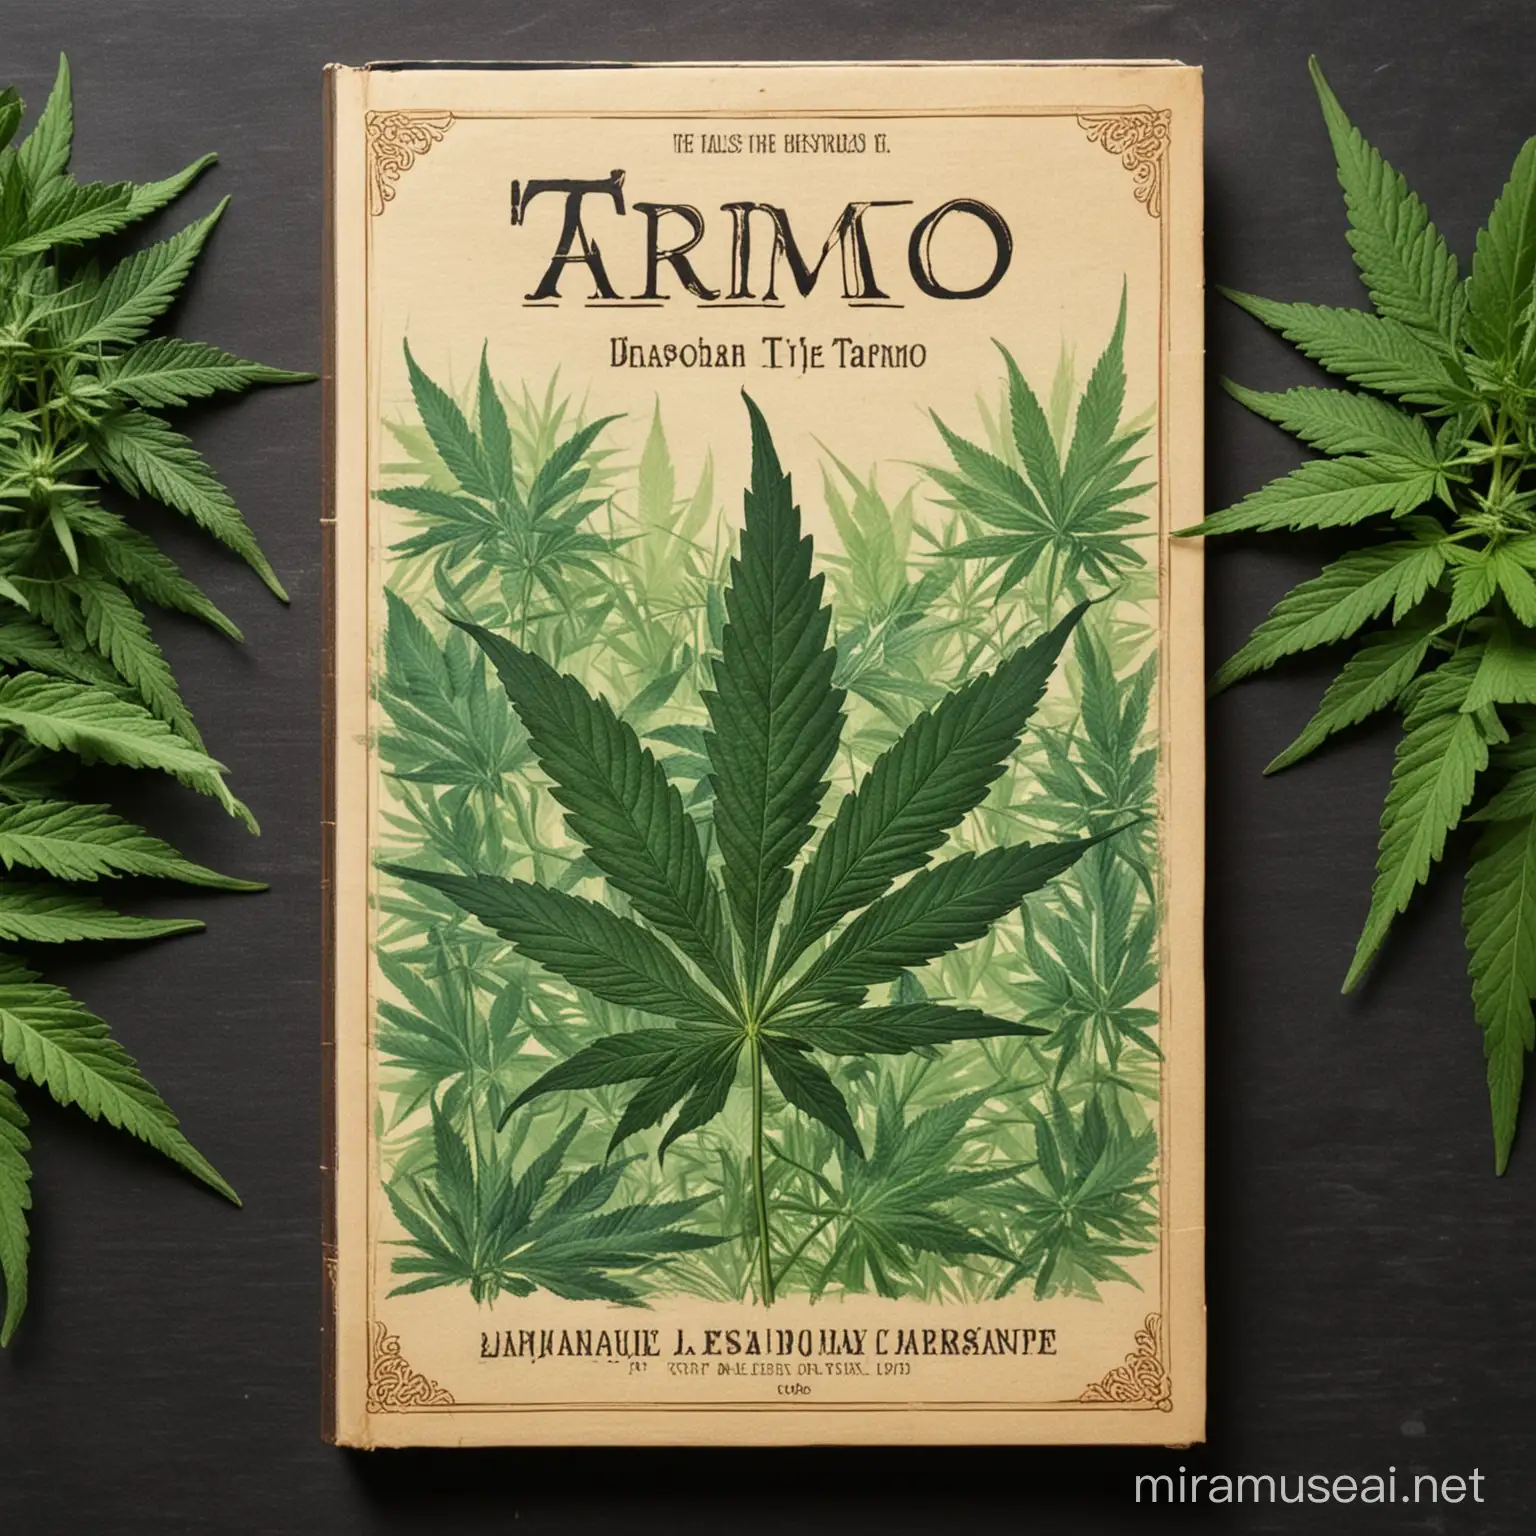 Professor Tarimos Cannabis Tales by Emmanuel Tarimo